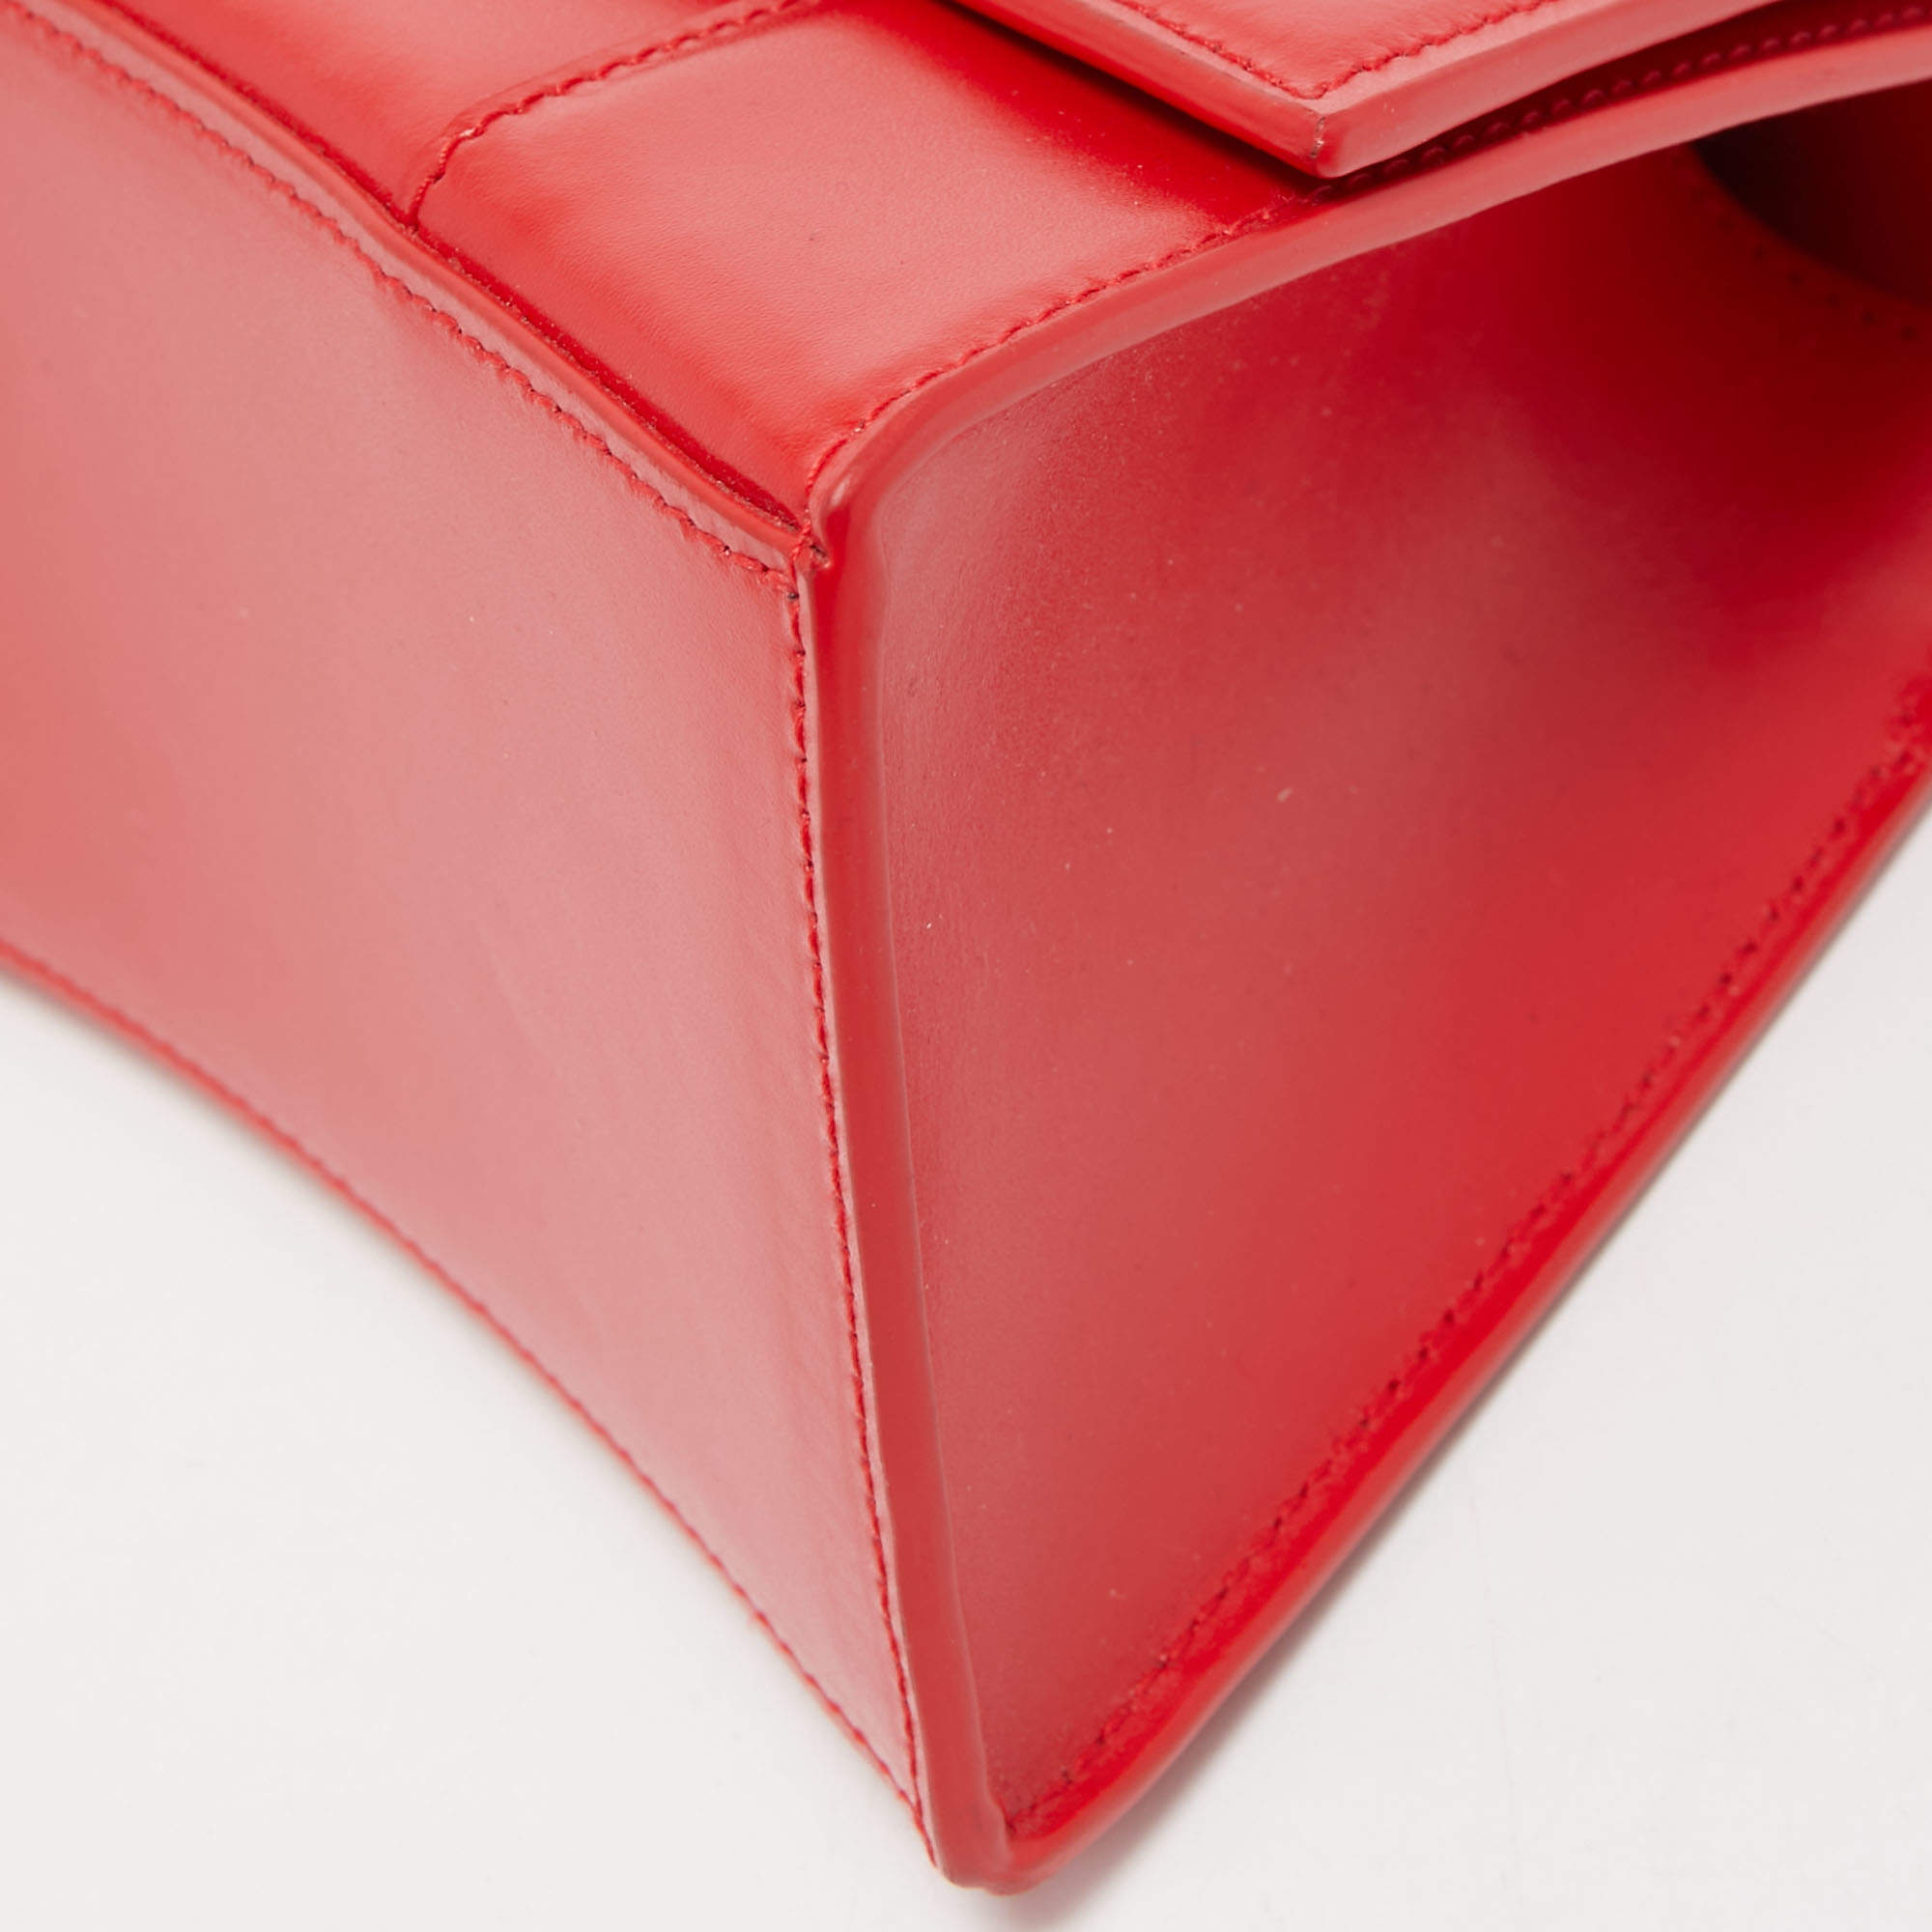 BALENCIAGA Shiny Box Calfskin Hourglass Top Handle Bag XS Bright Red  1285162